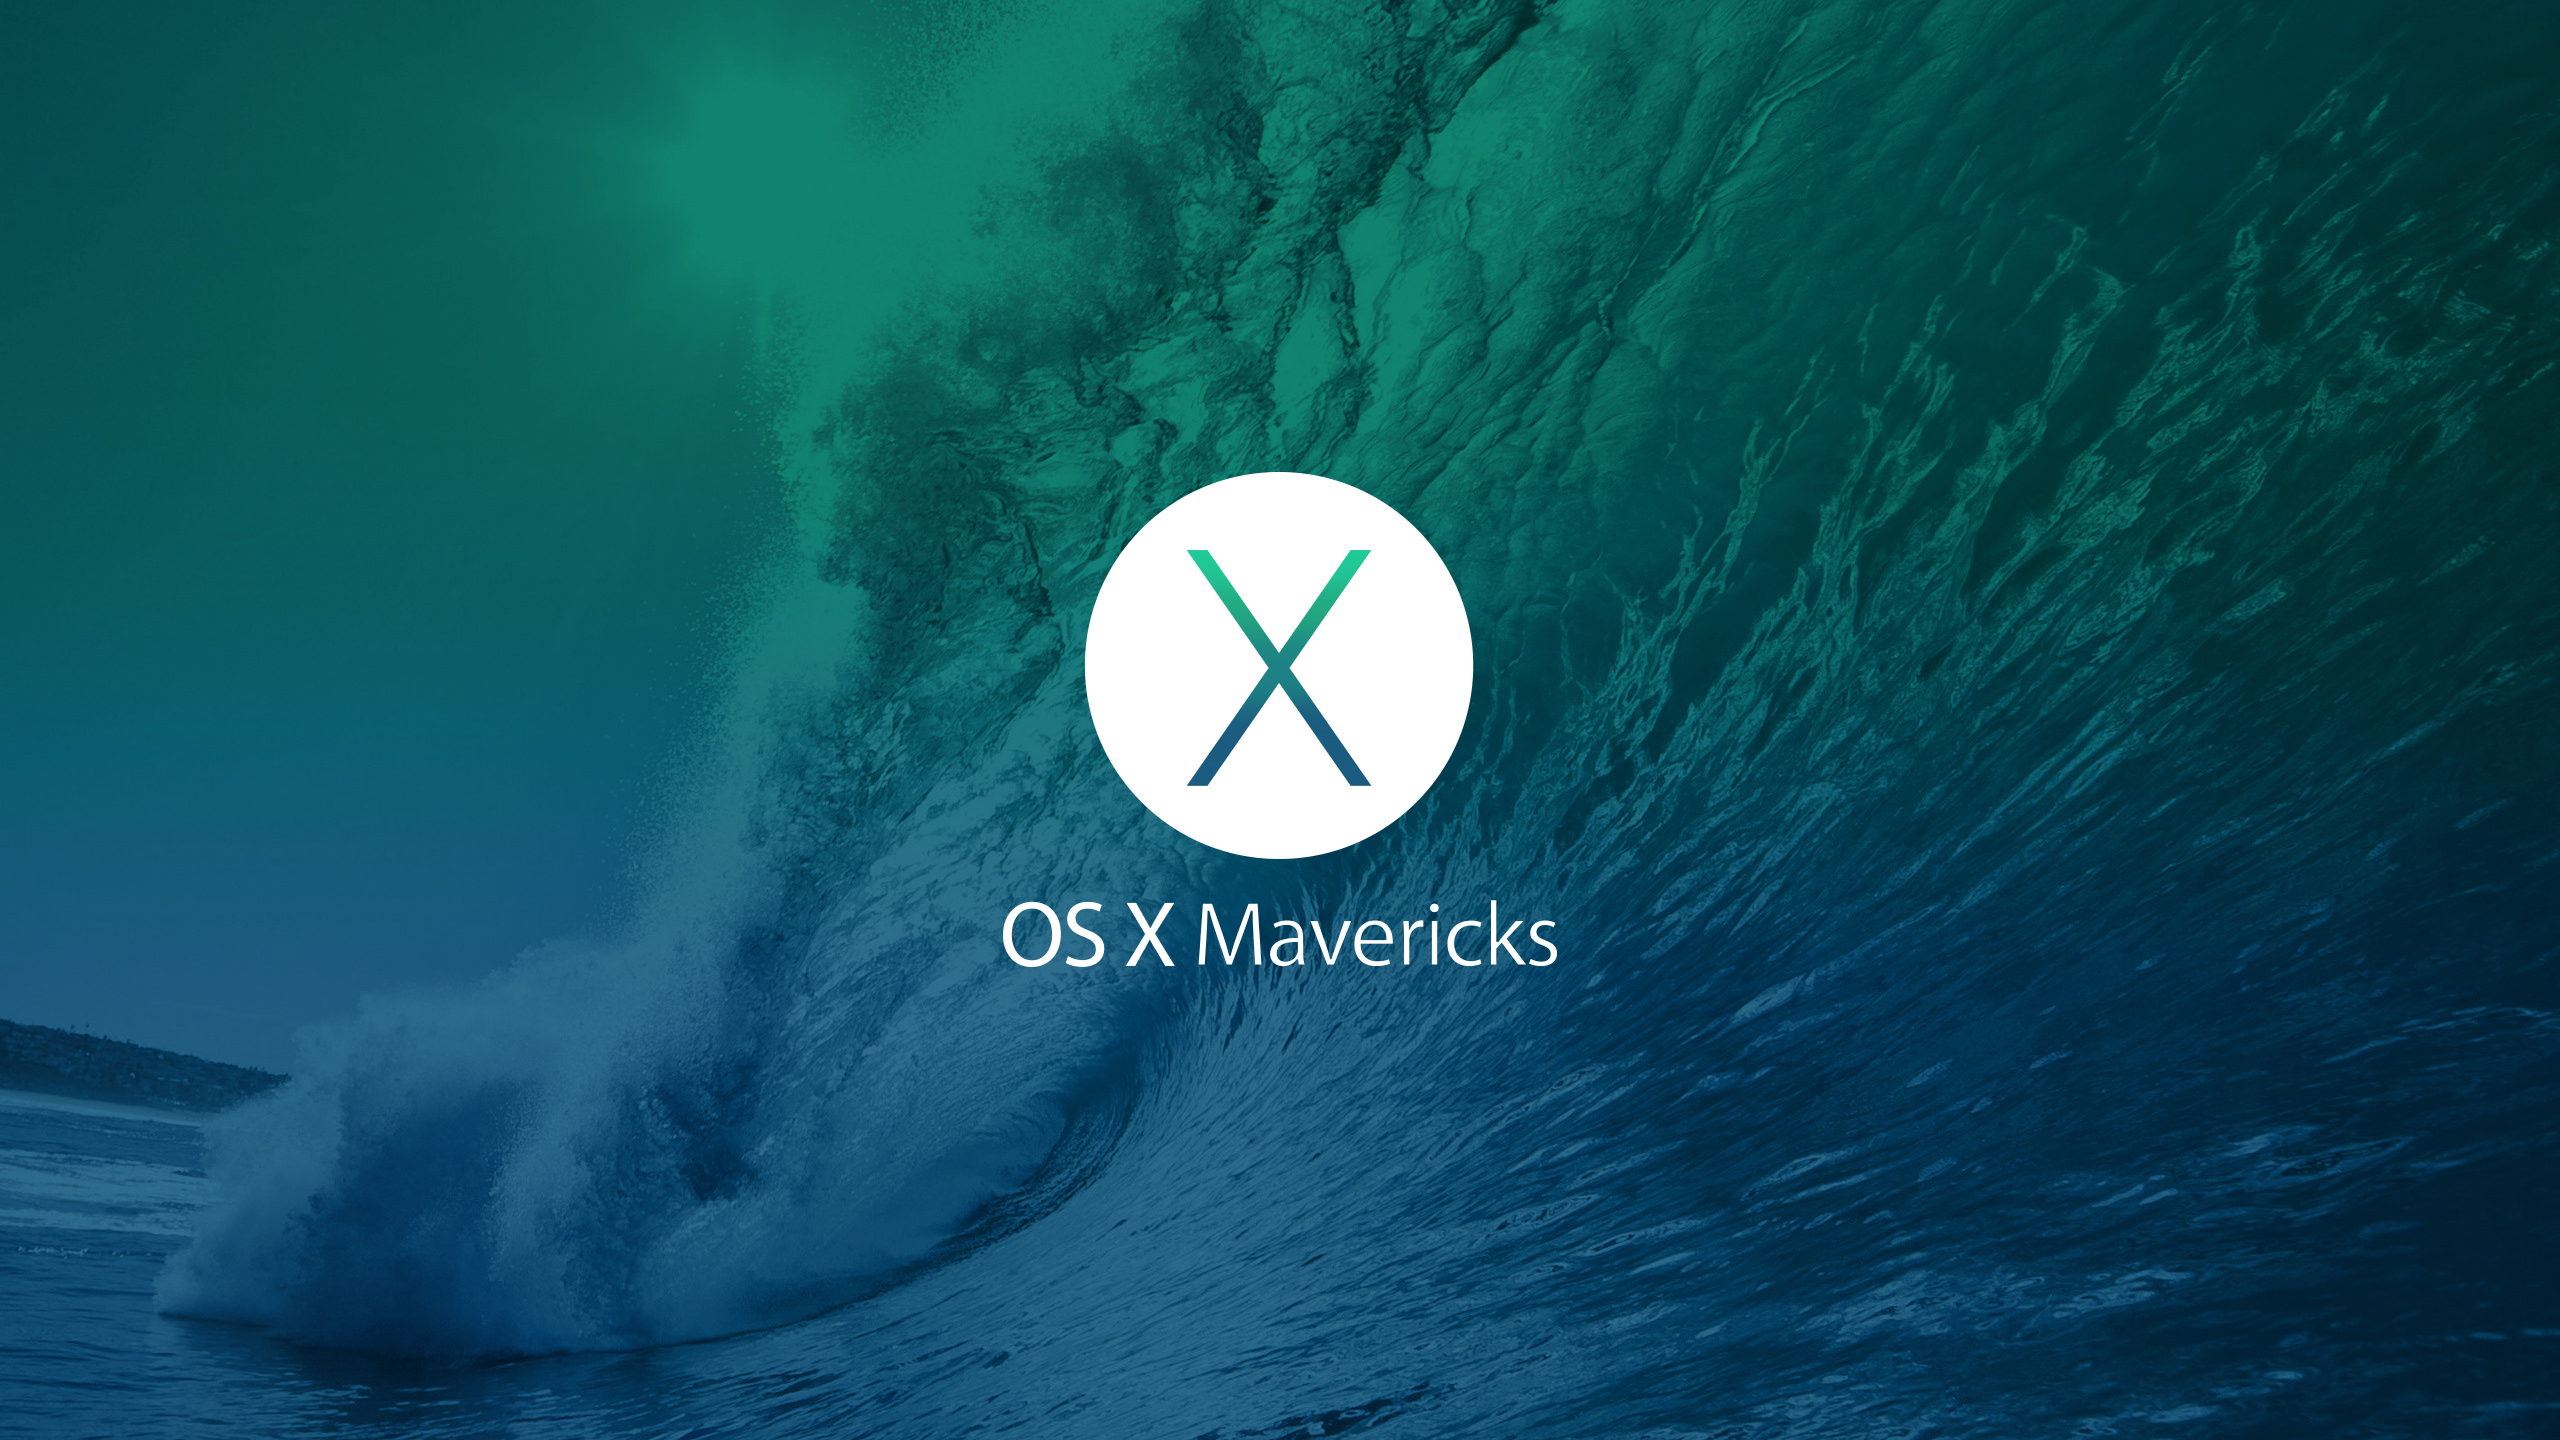 Desktop - Wallpaper Request - OS X Mavericks | MacRumors Forums